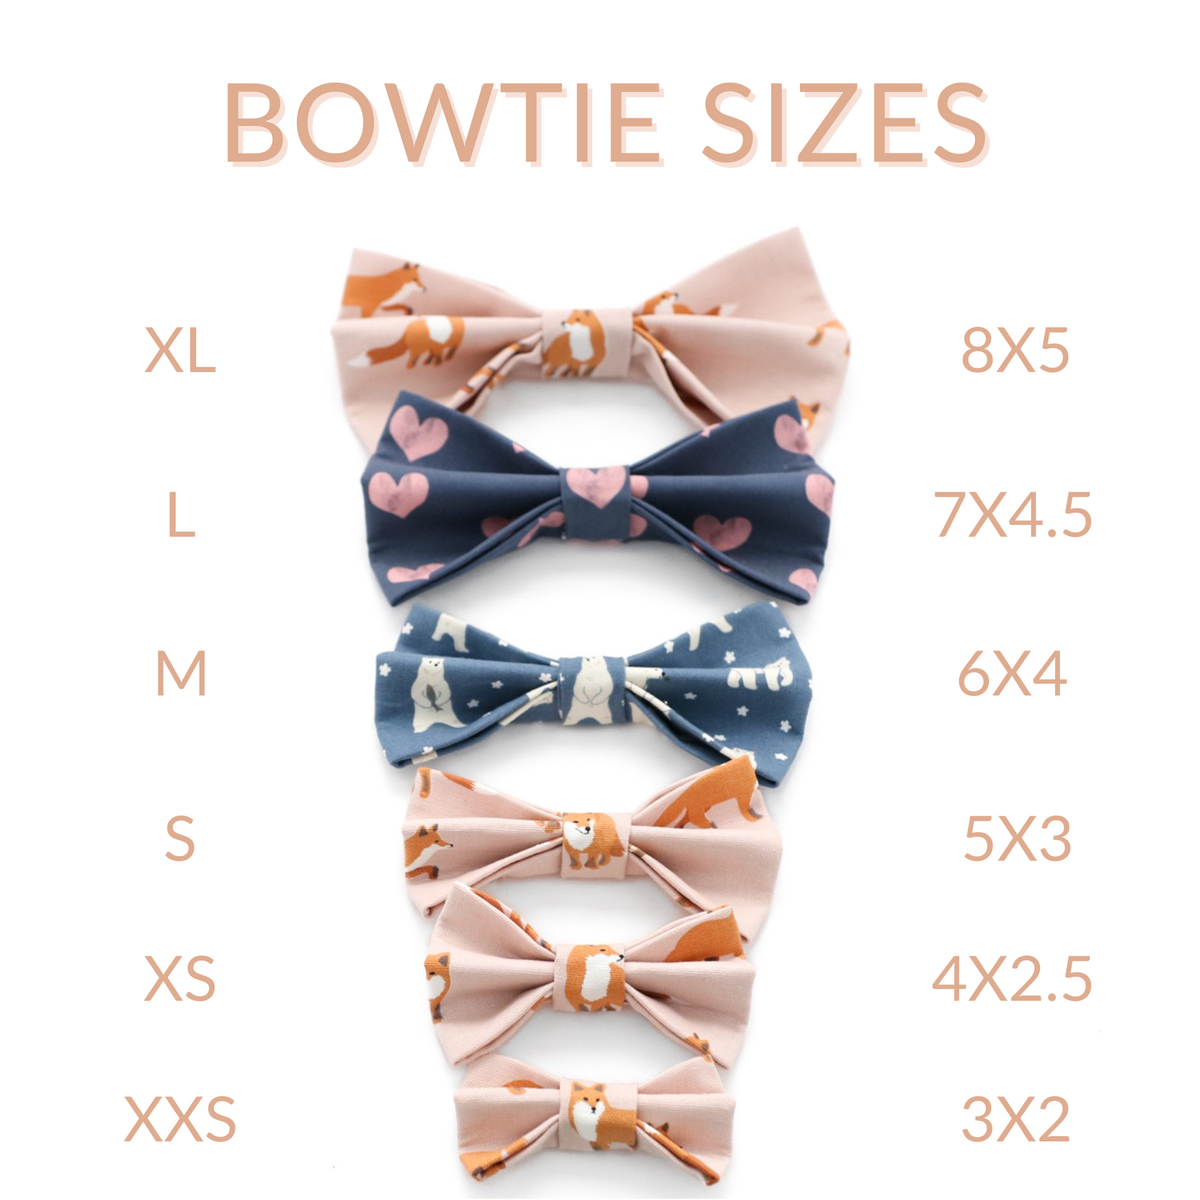 dog bowtie size chart